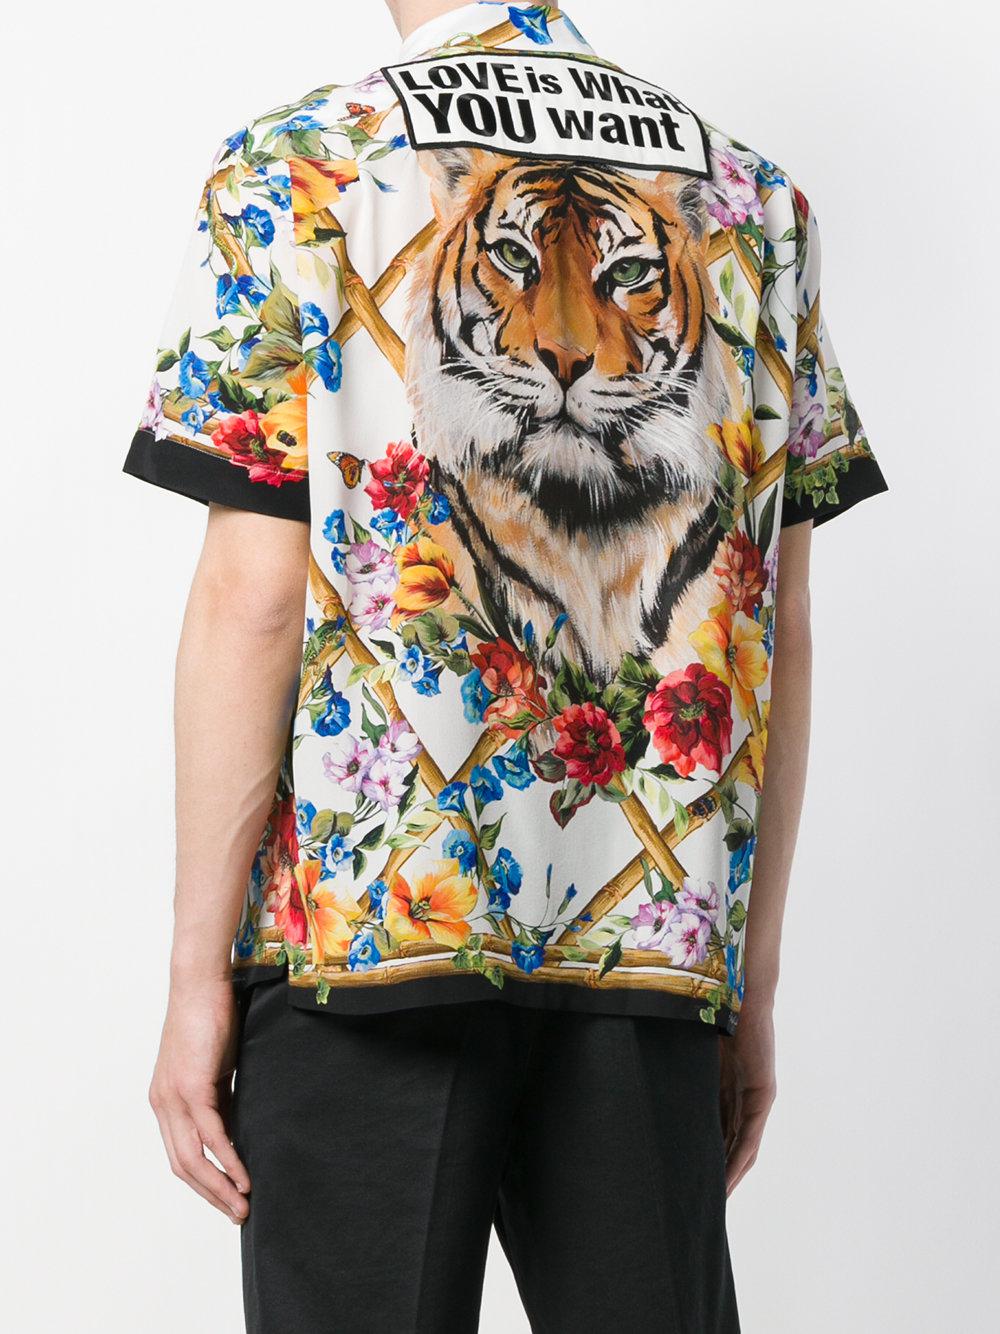 Dolce & Gabbana Tiger And Floral Print Shirt for Men